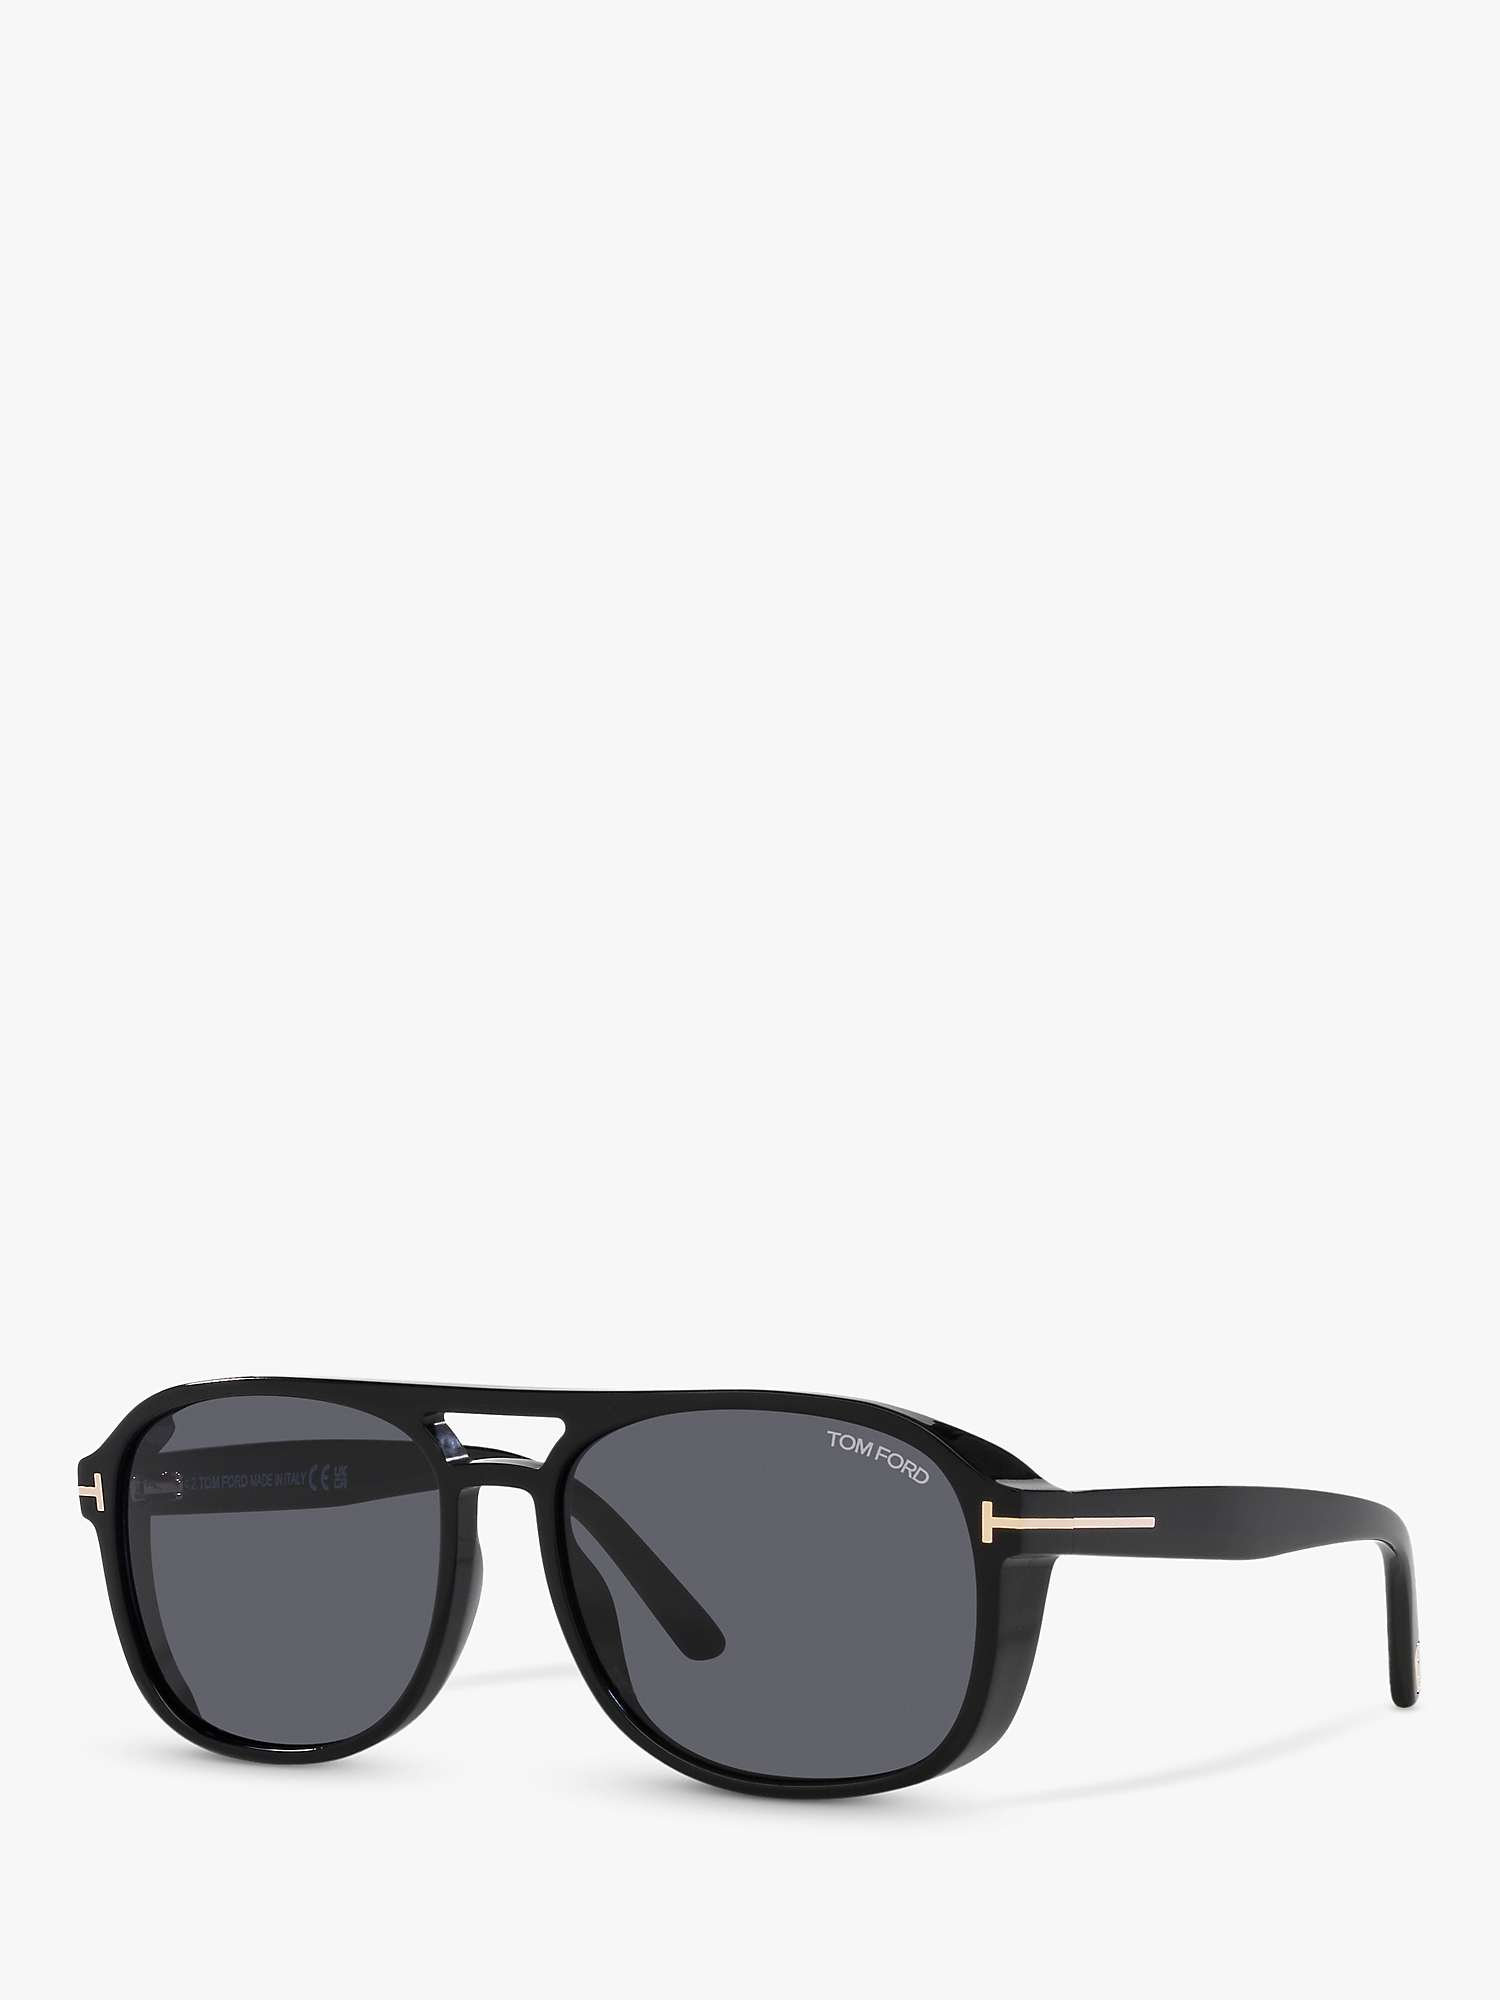 Buy TOM FORD TF1022 Men's Rosco Square Sunglasses, Shiny Black/Grey Online at johnlewis.com